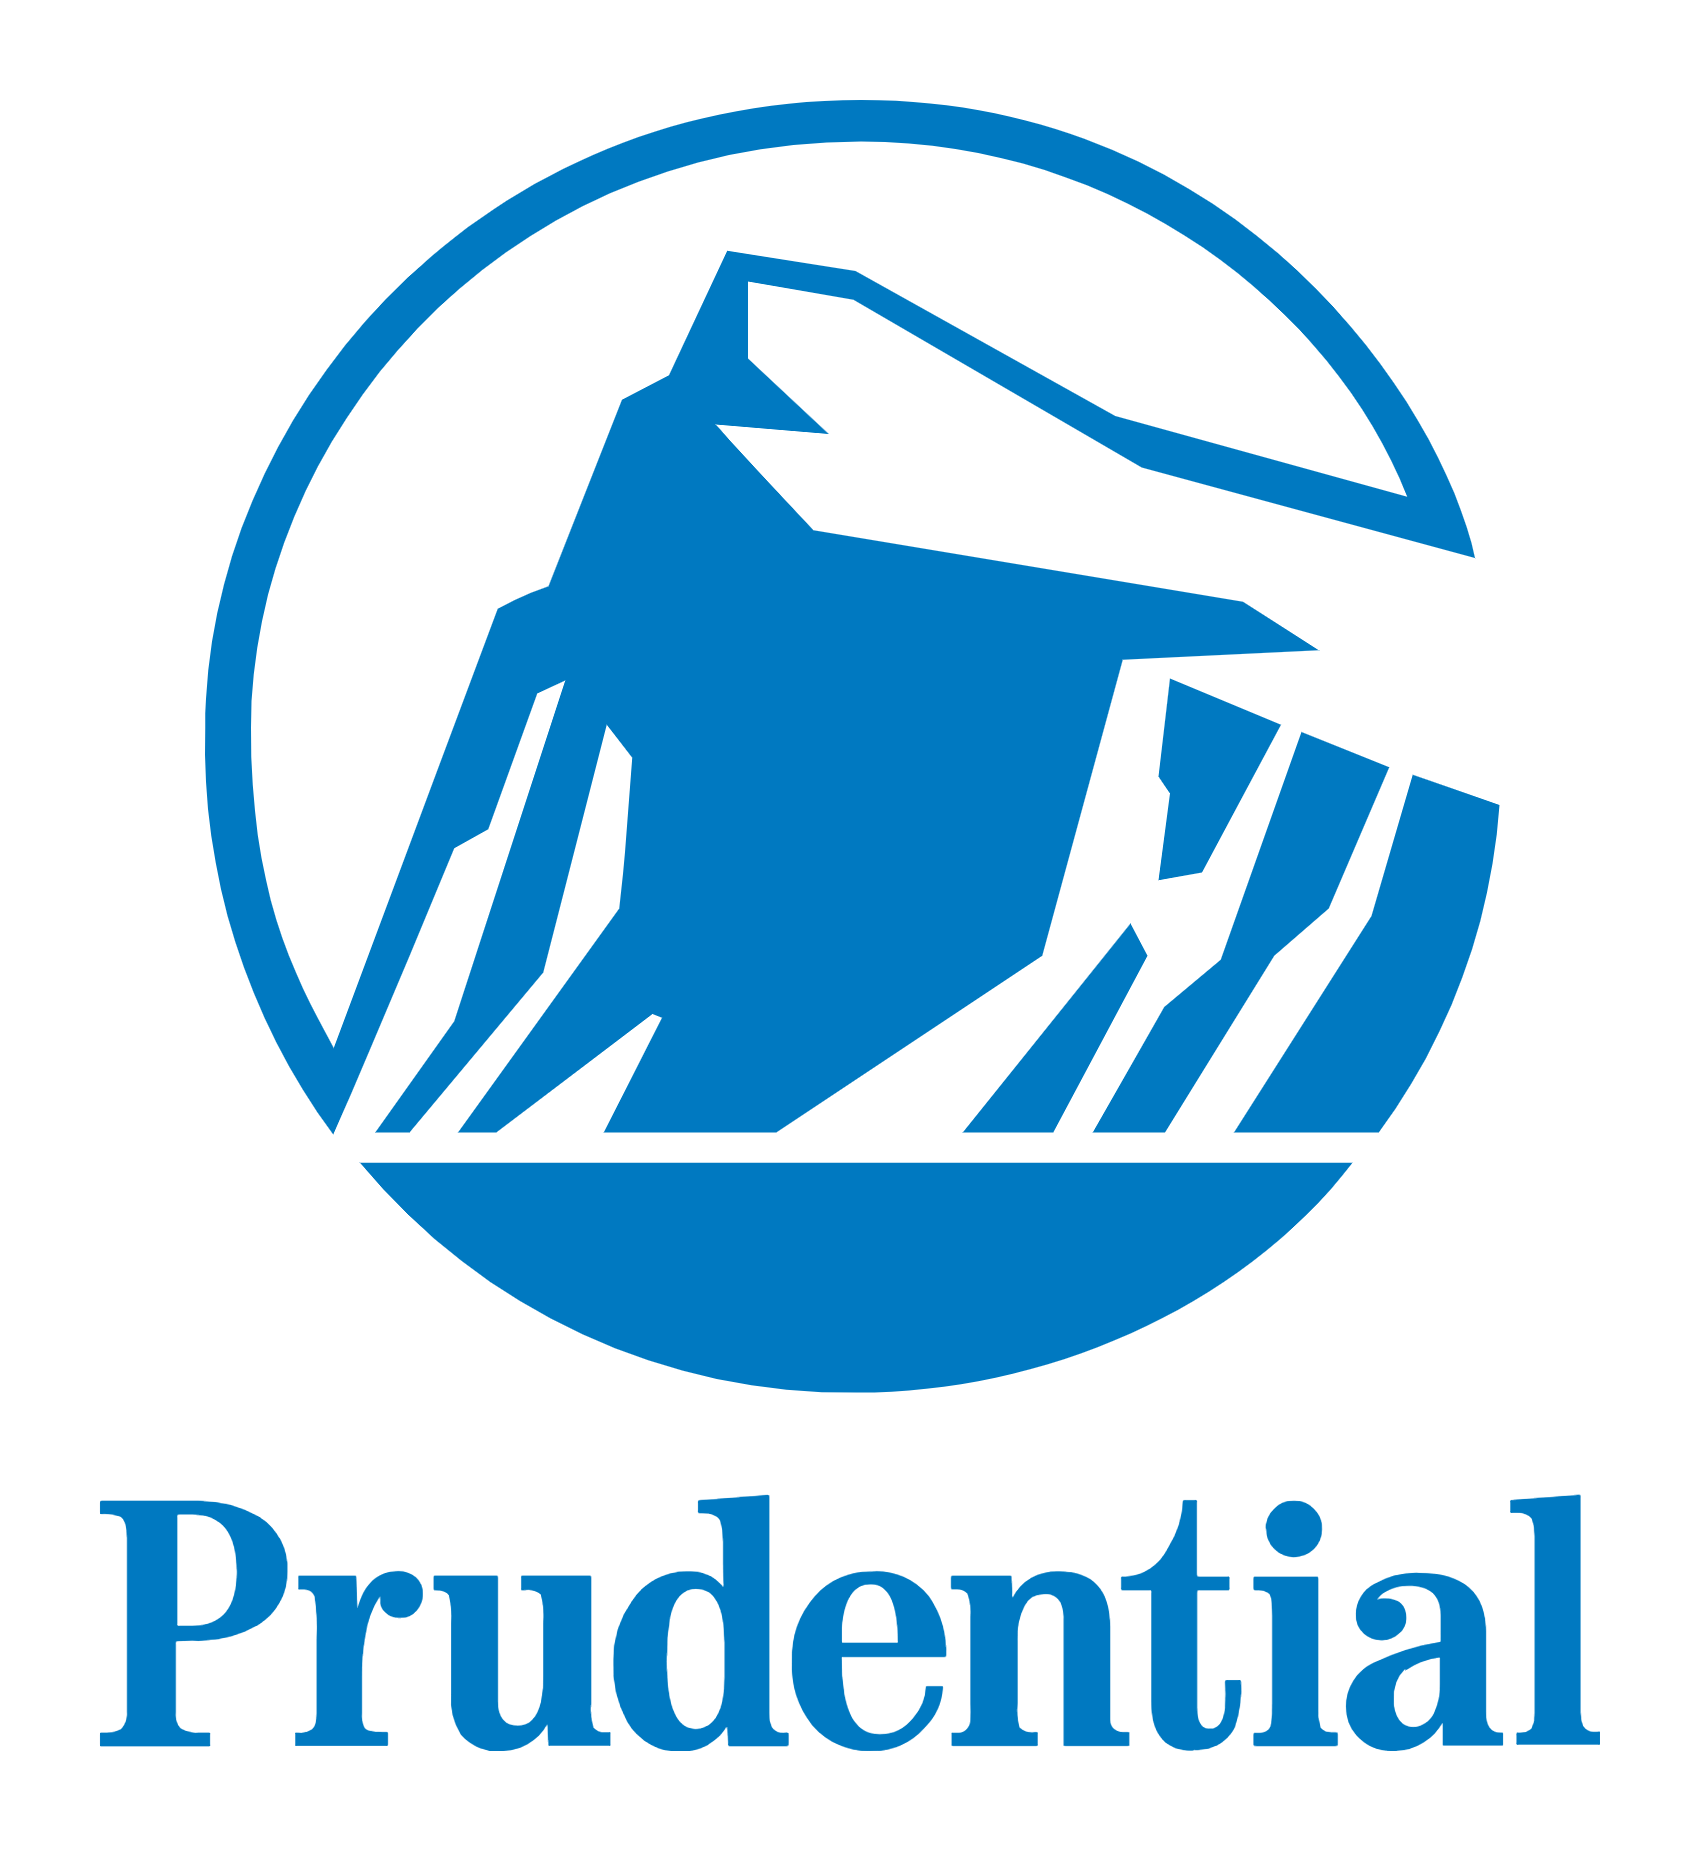 Download HD Prudential Hong Kong Limited-logo - Prudential Hong Kong Logo  Transparent PNG Image - NicePNG.com